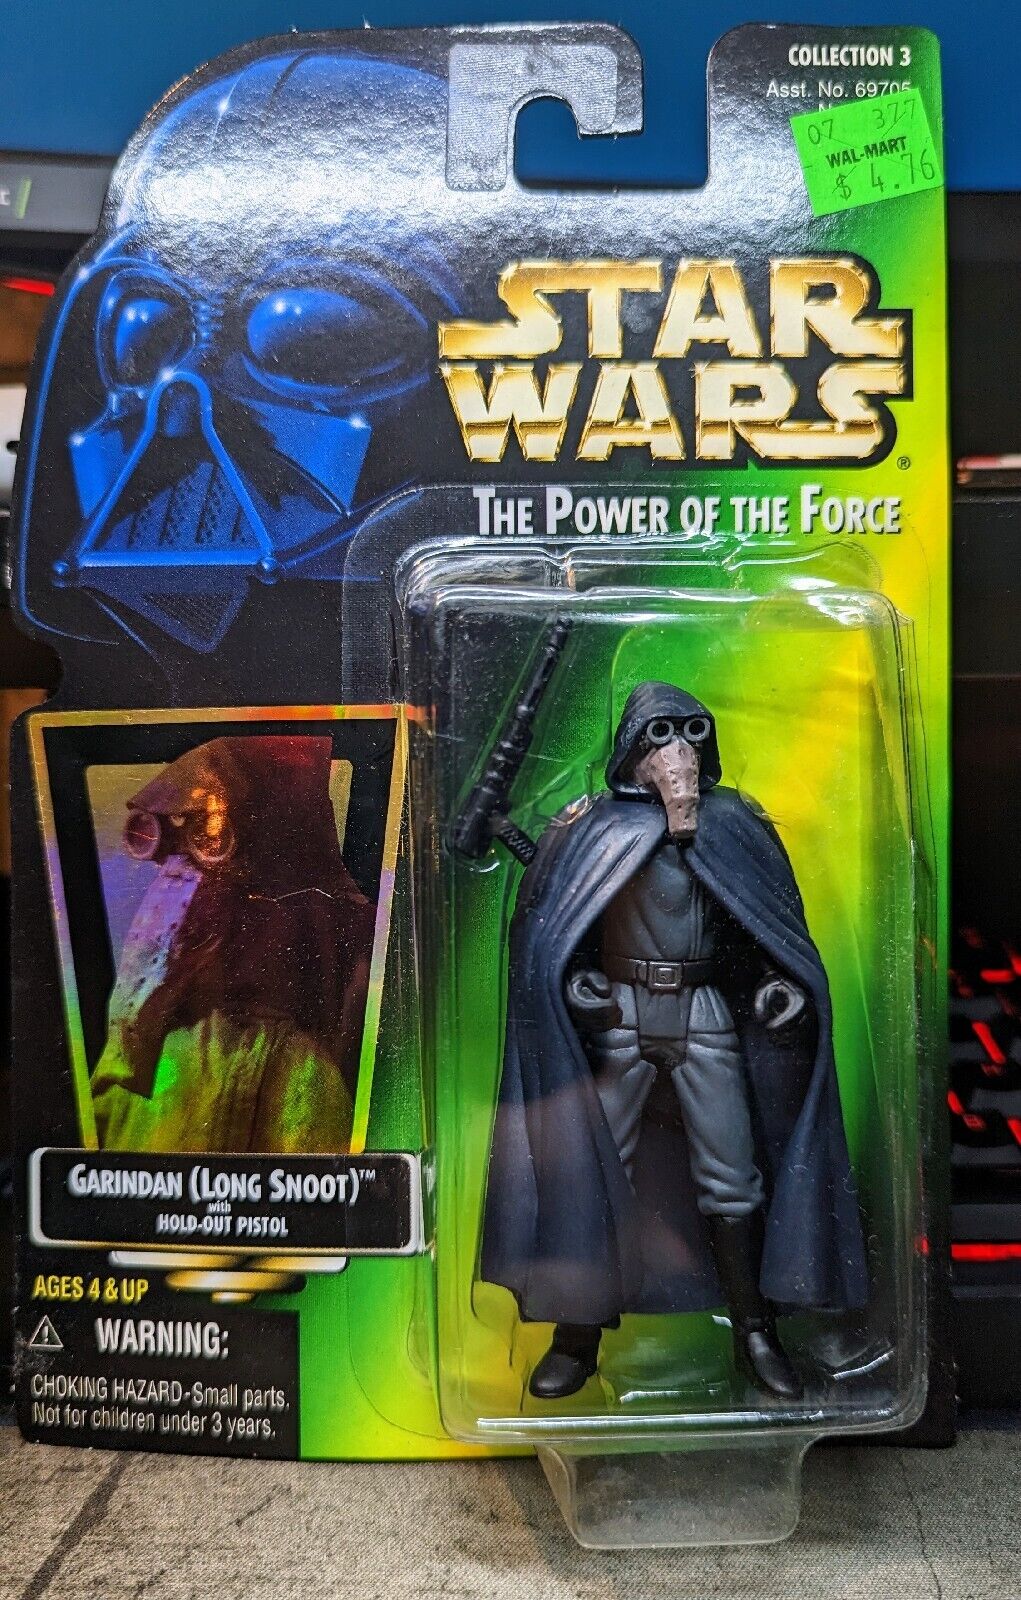 Star Wars Garindan (Long Snoot) Power of the force POTF